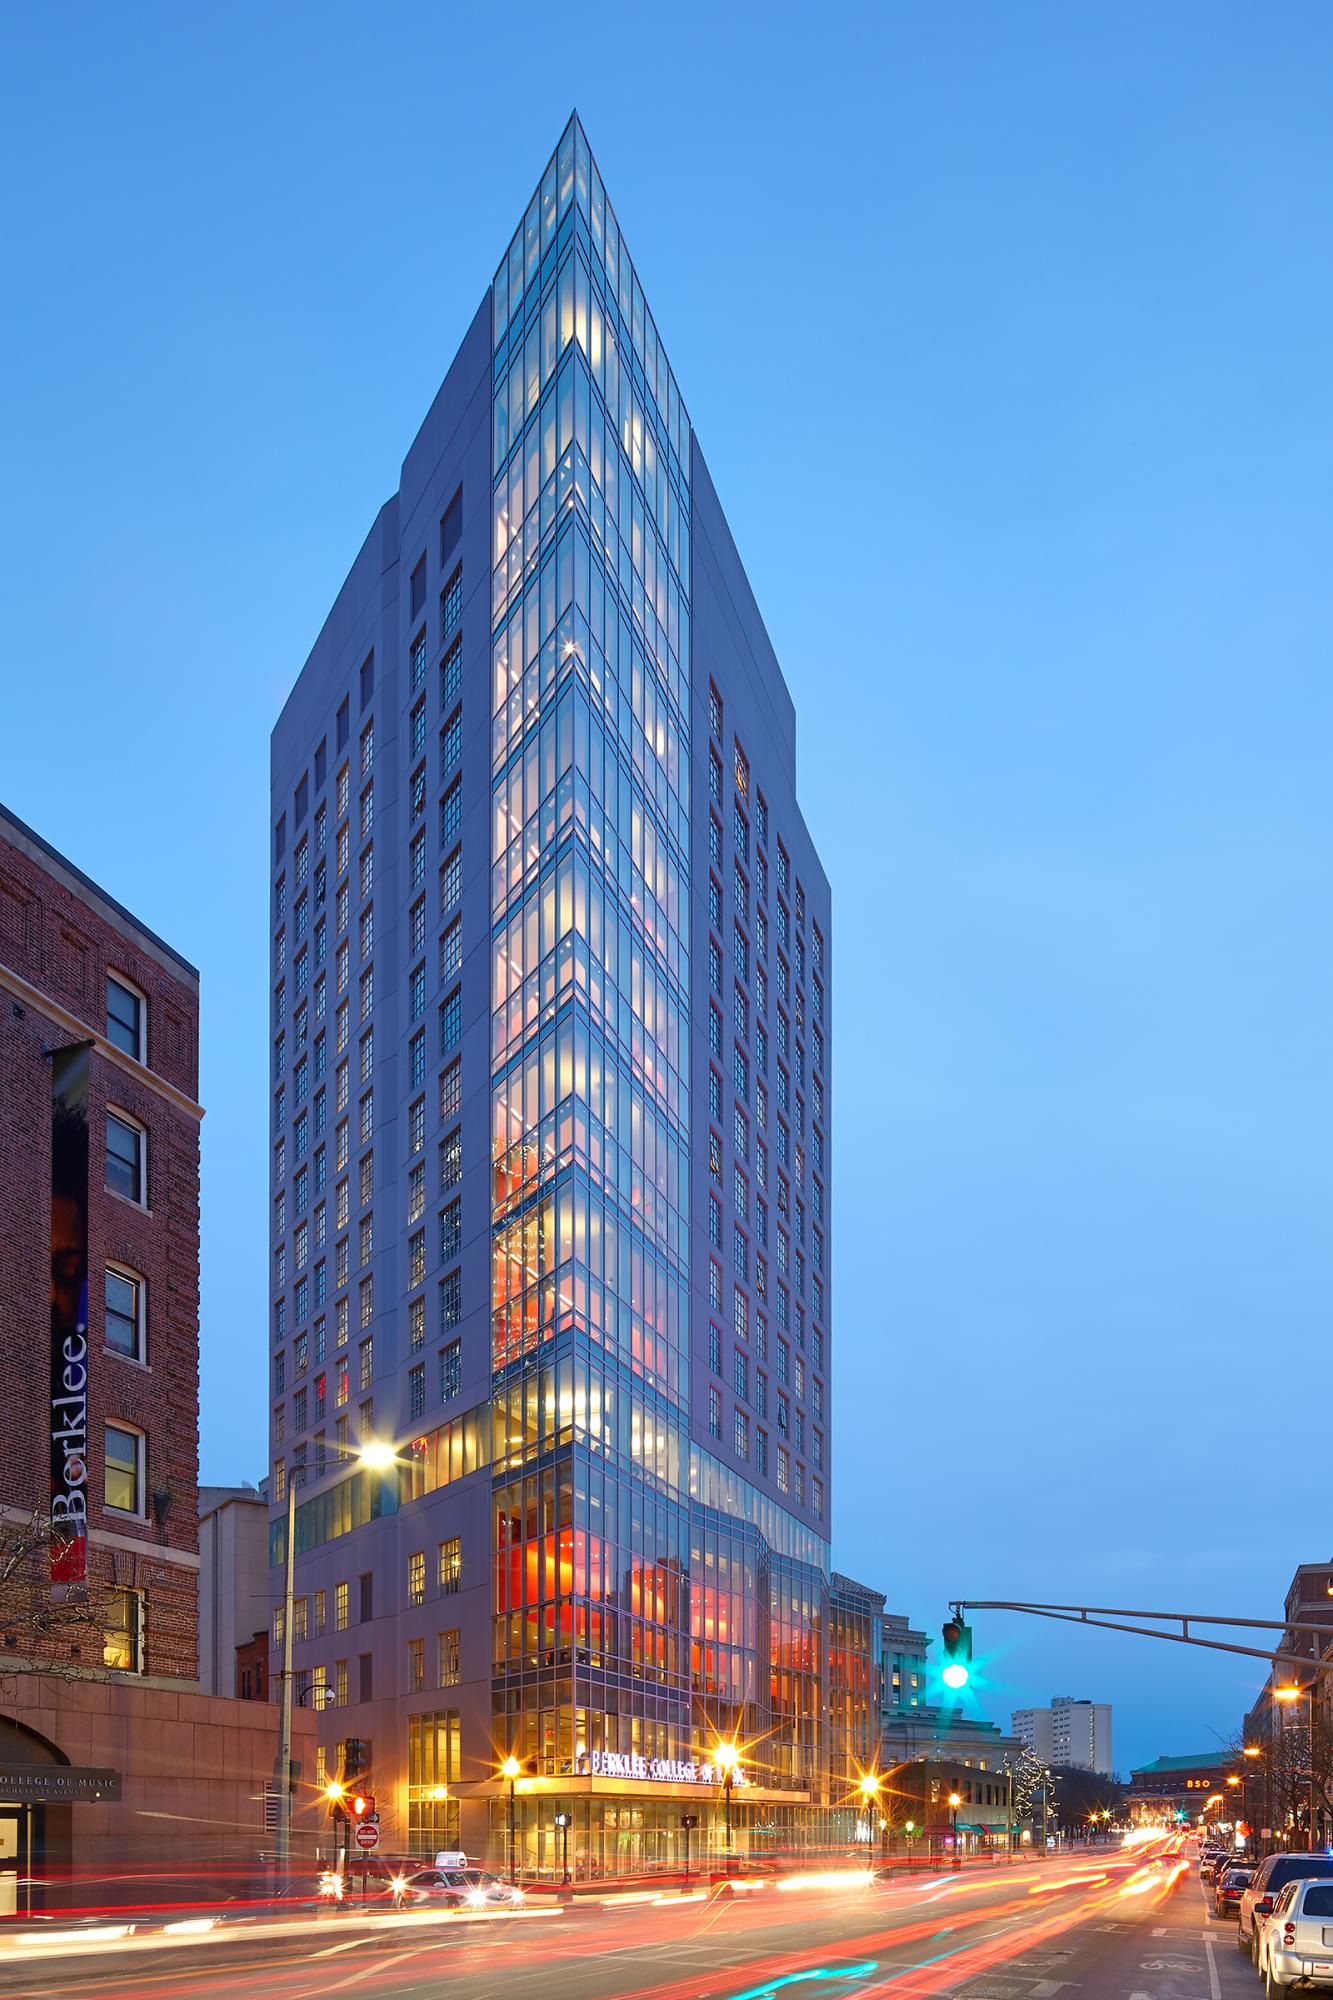 Berklee s 160 Massachusetts Avenue Building Earns LEED Gold